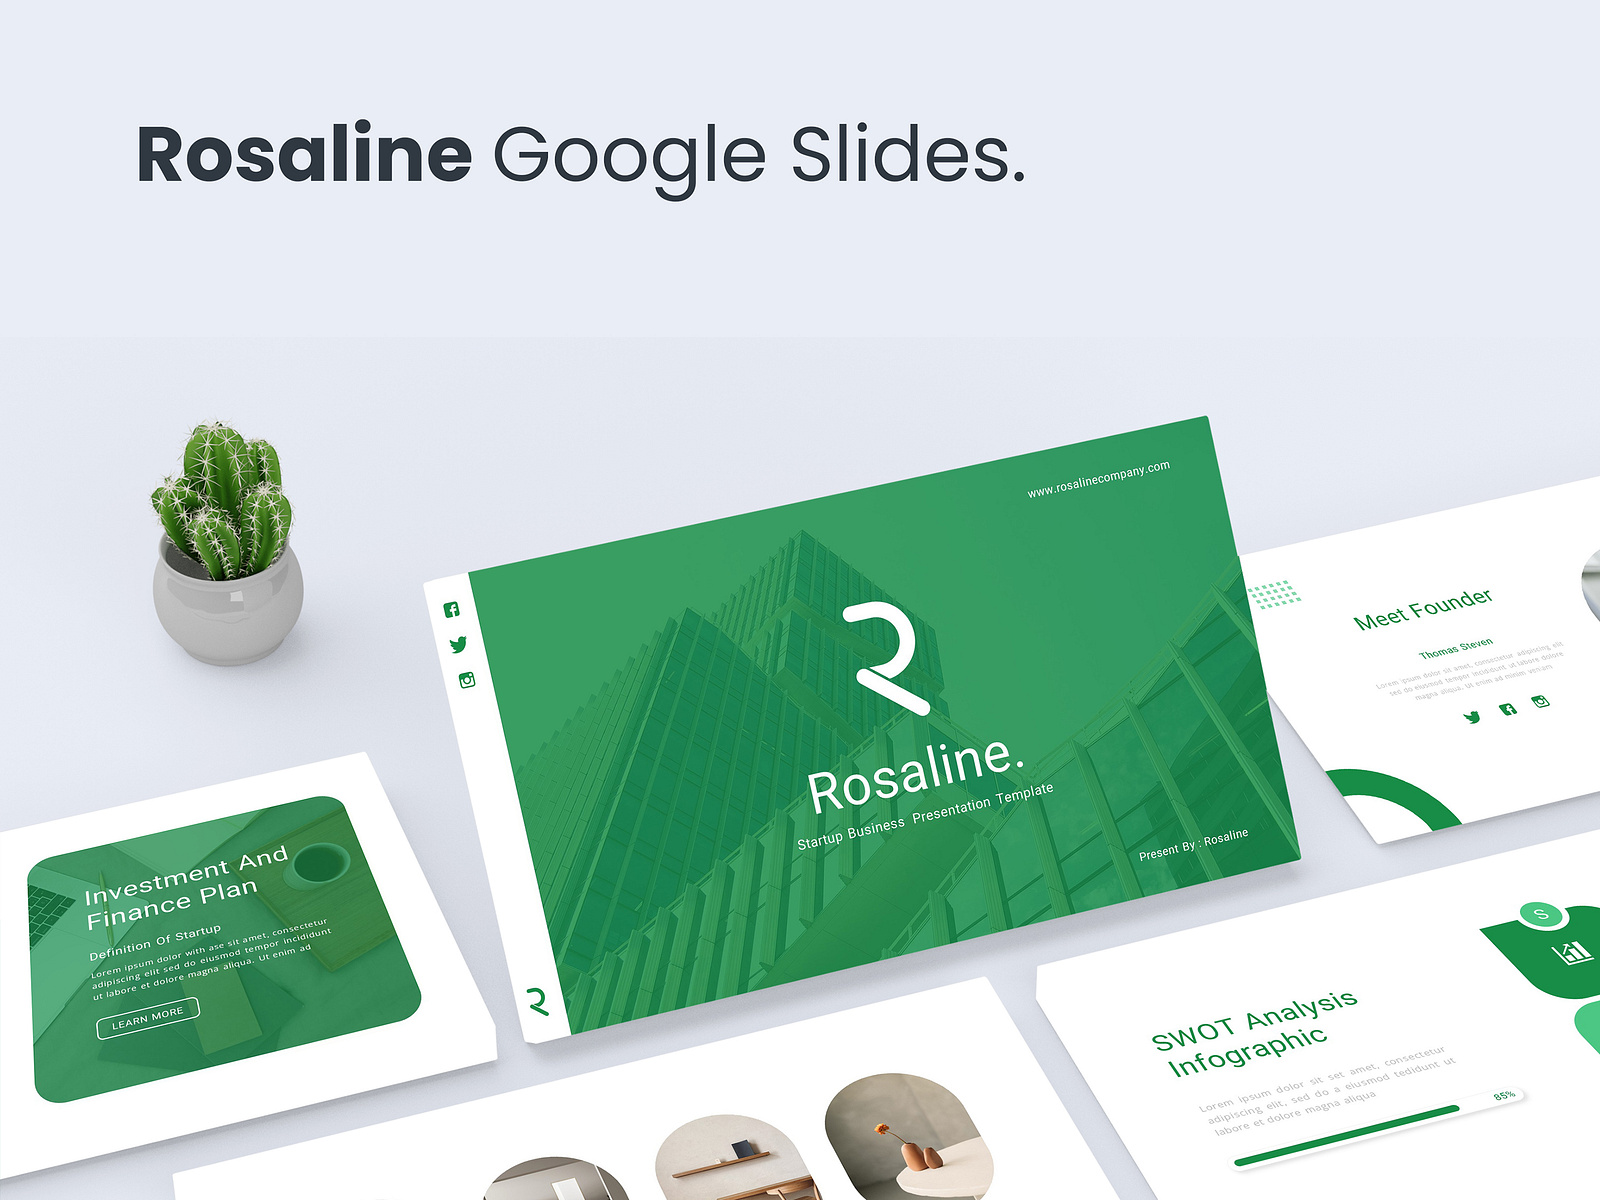 Rosaline Google Slides by King Graphix on Dribbble